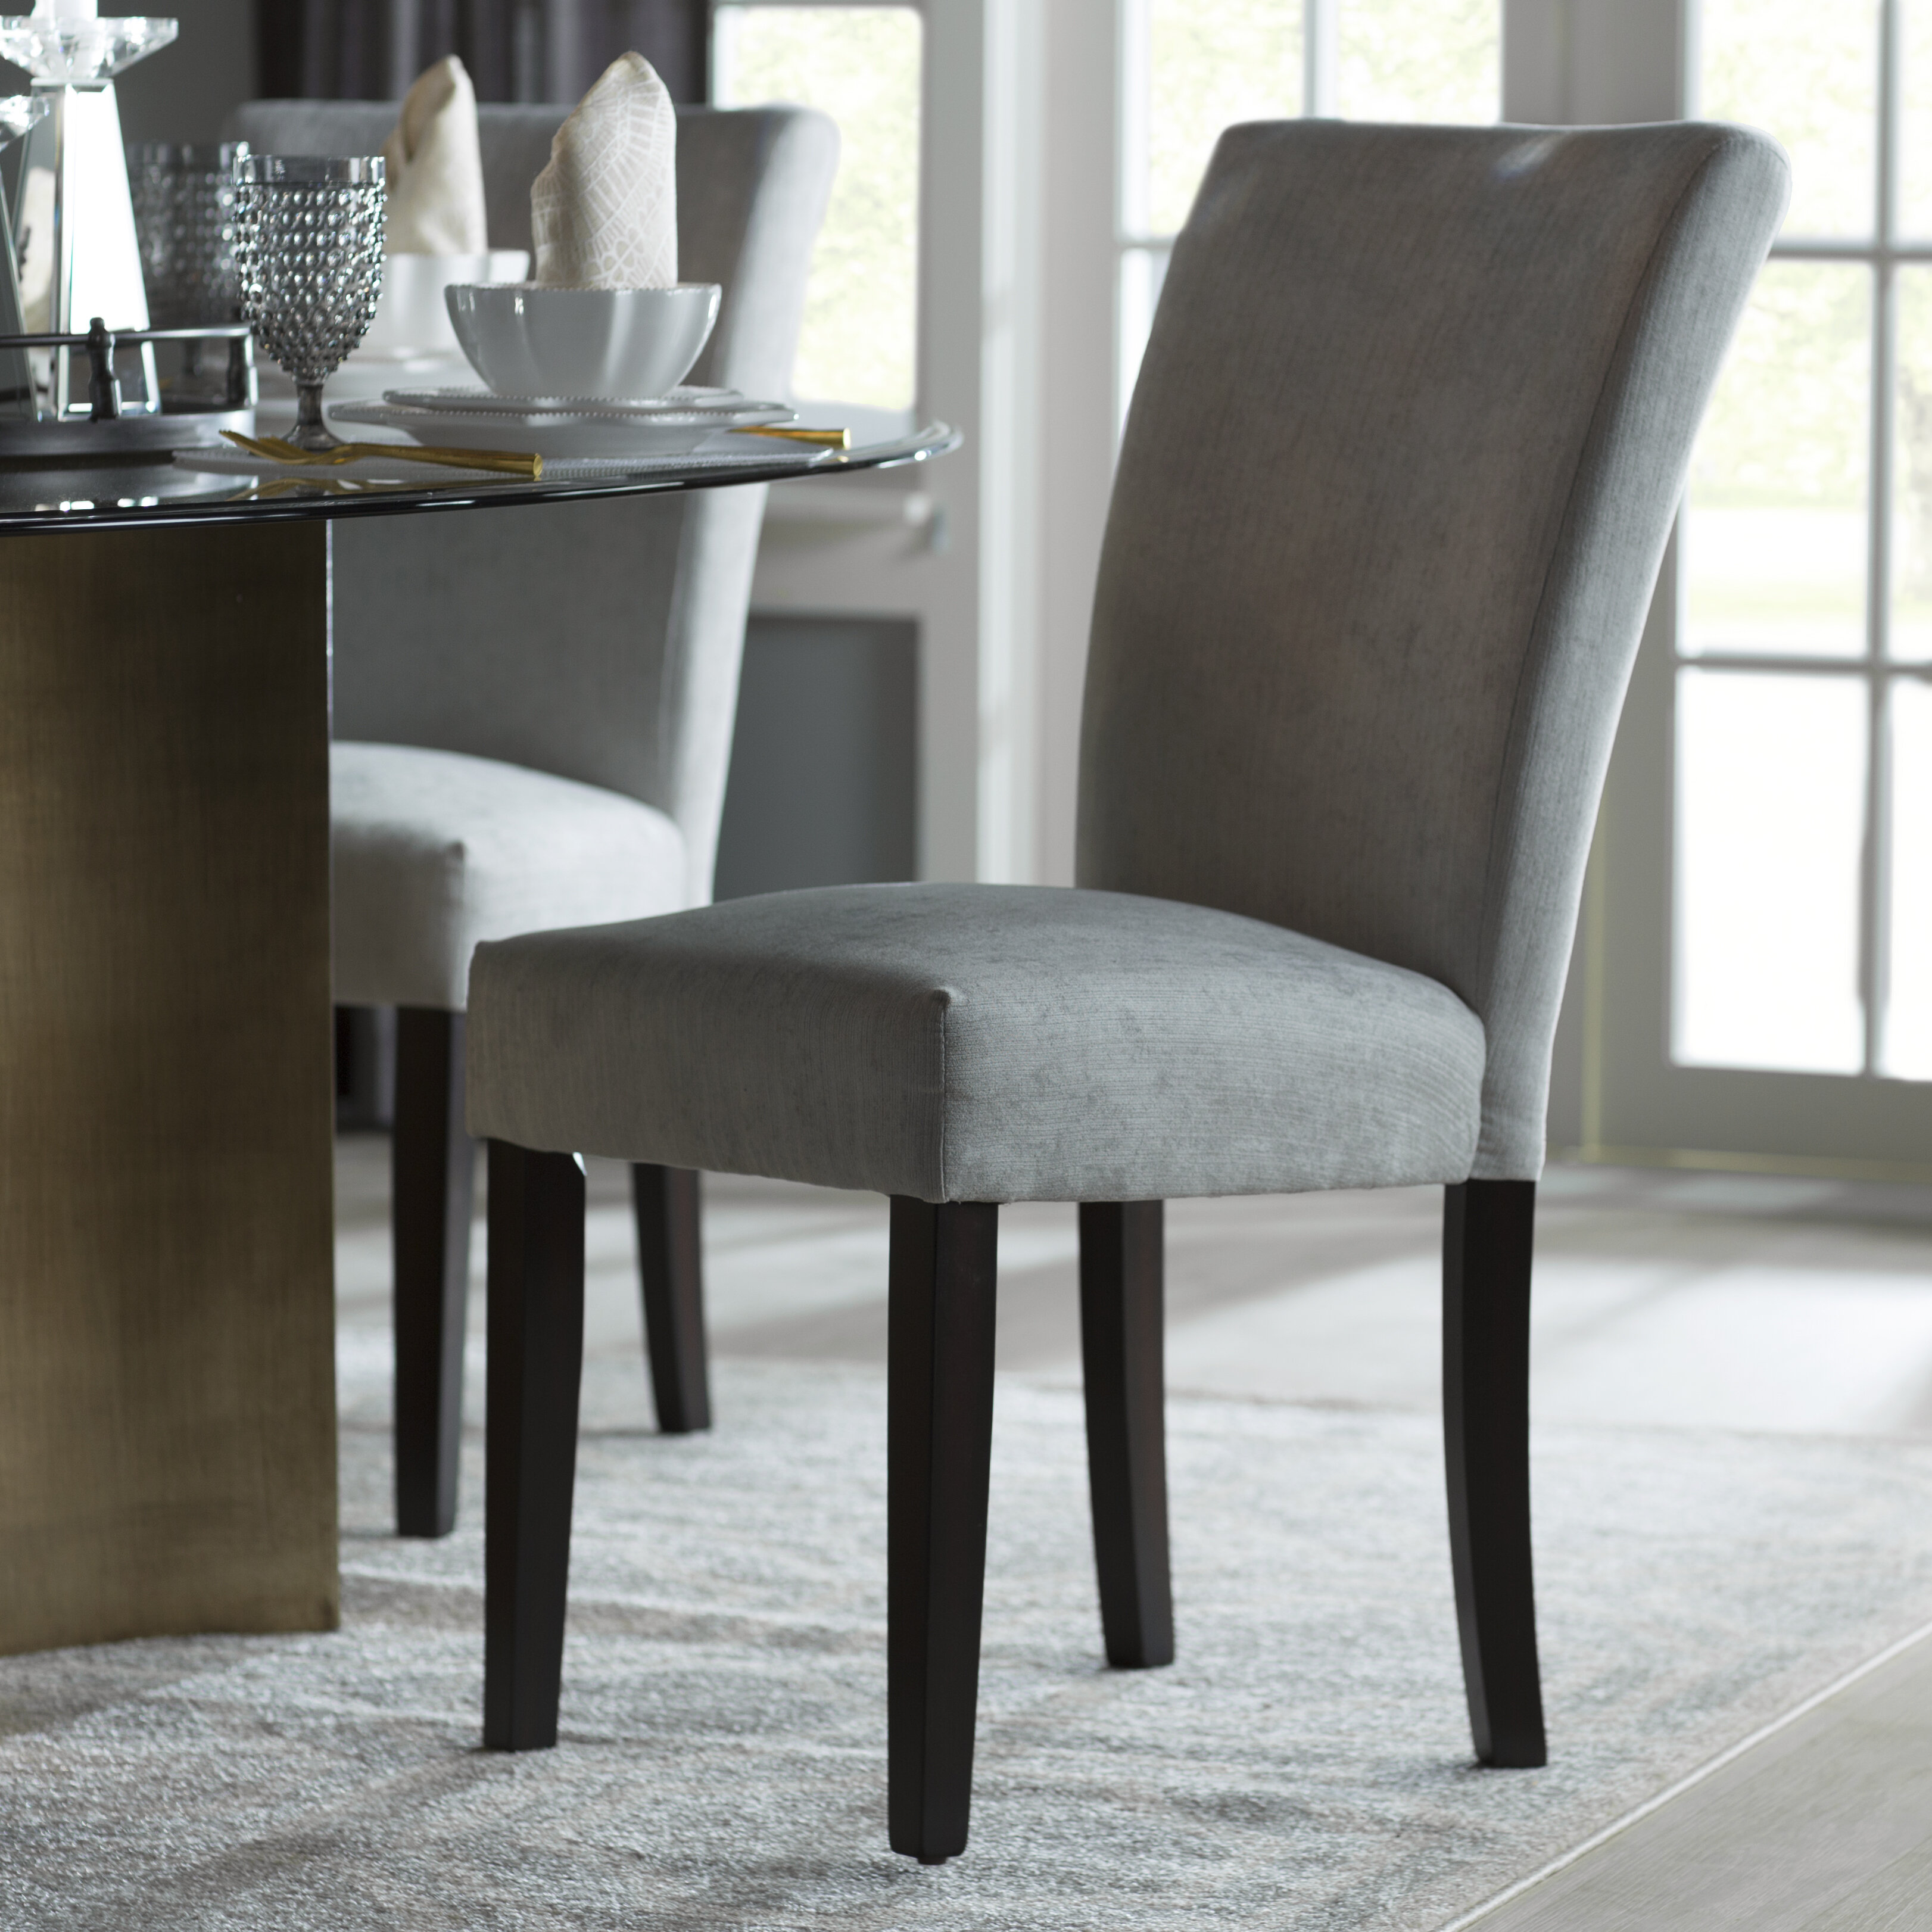 Mercer41 Danberry Upholstered Dining Chair Reviews Wayfair